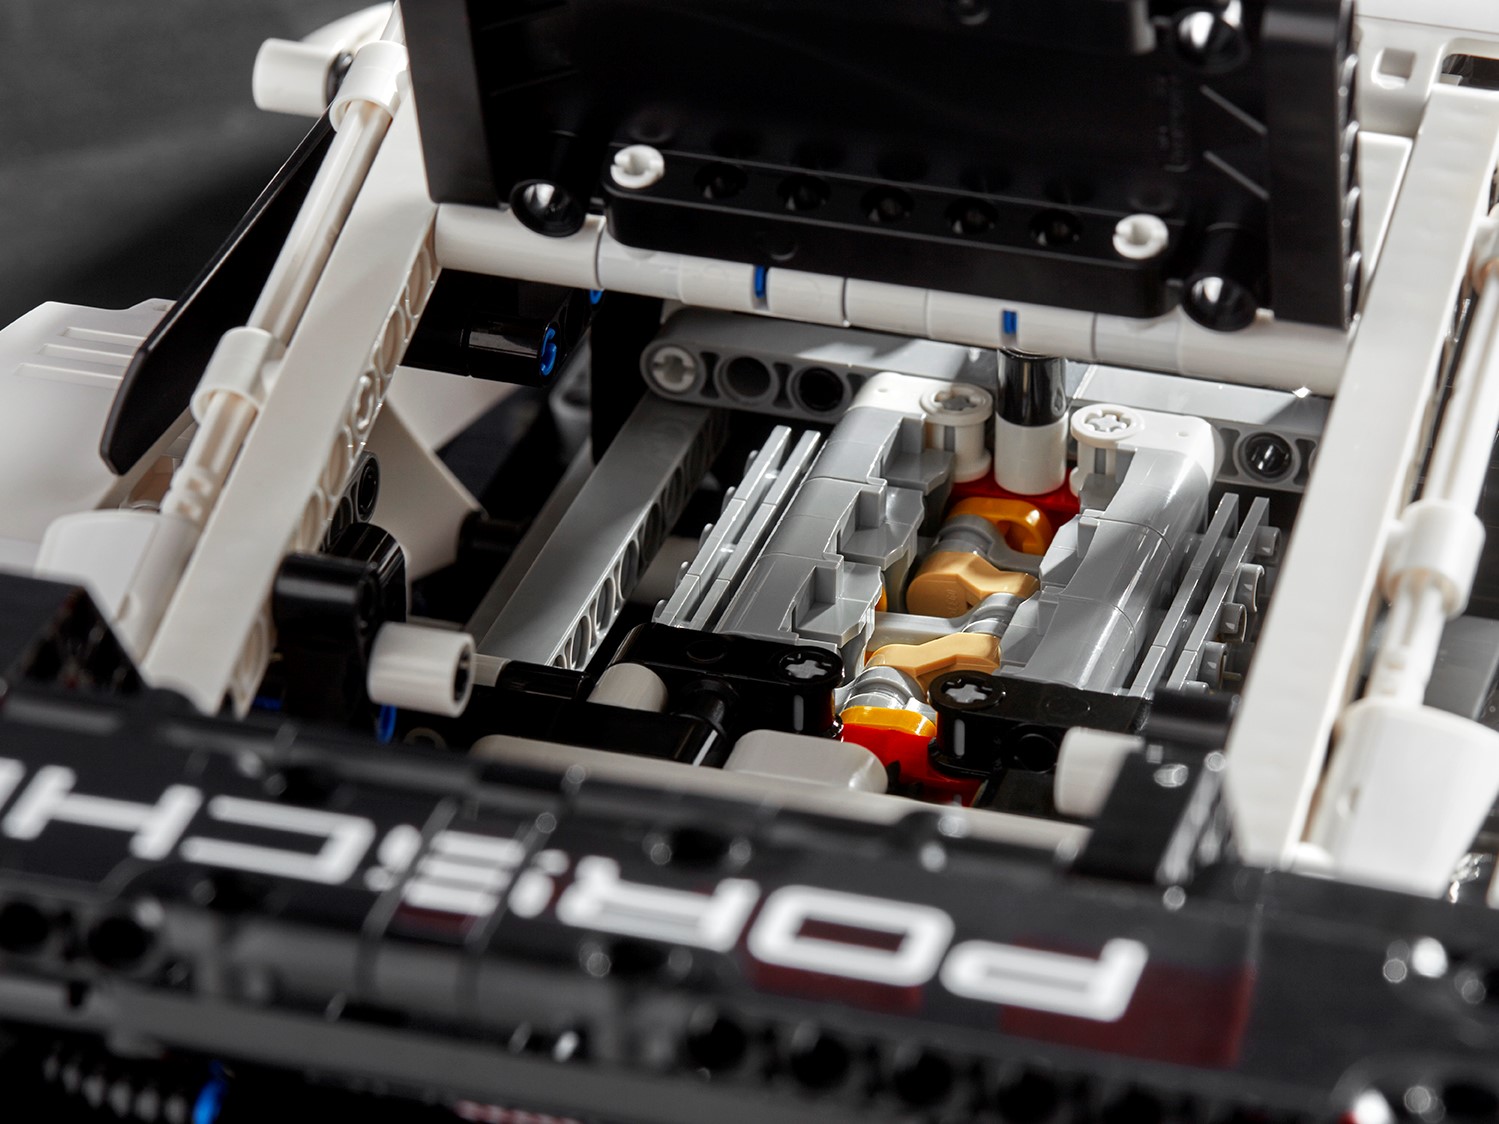 Porsche 911 RSR 42096 | Technic™ | Buy online at the Official LEGO 